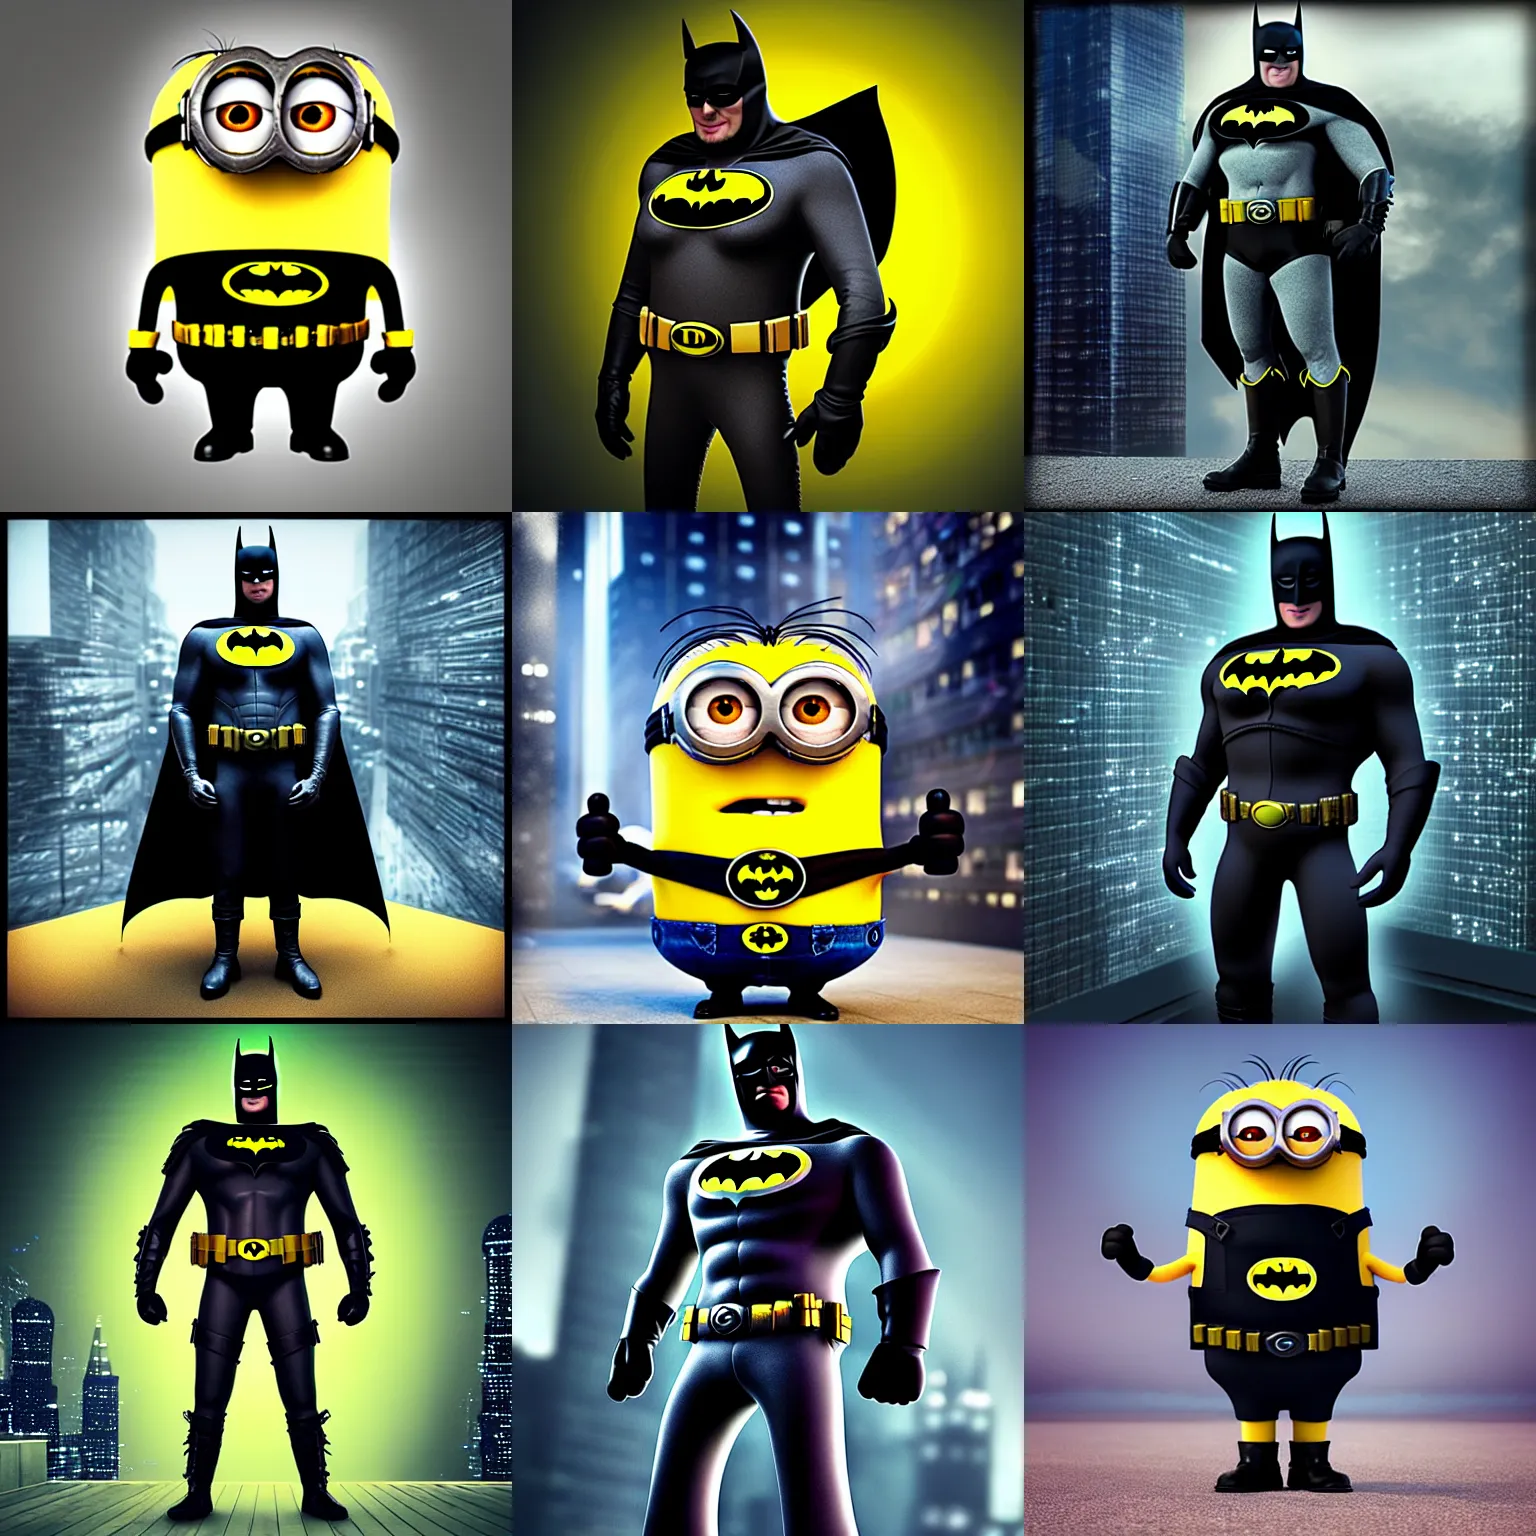 Prompt: “minion batman, full body, UHD, hyperrealistic render, 4k, cyberpunk”